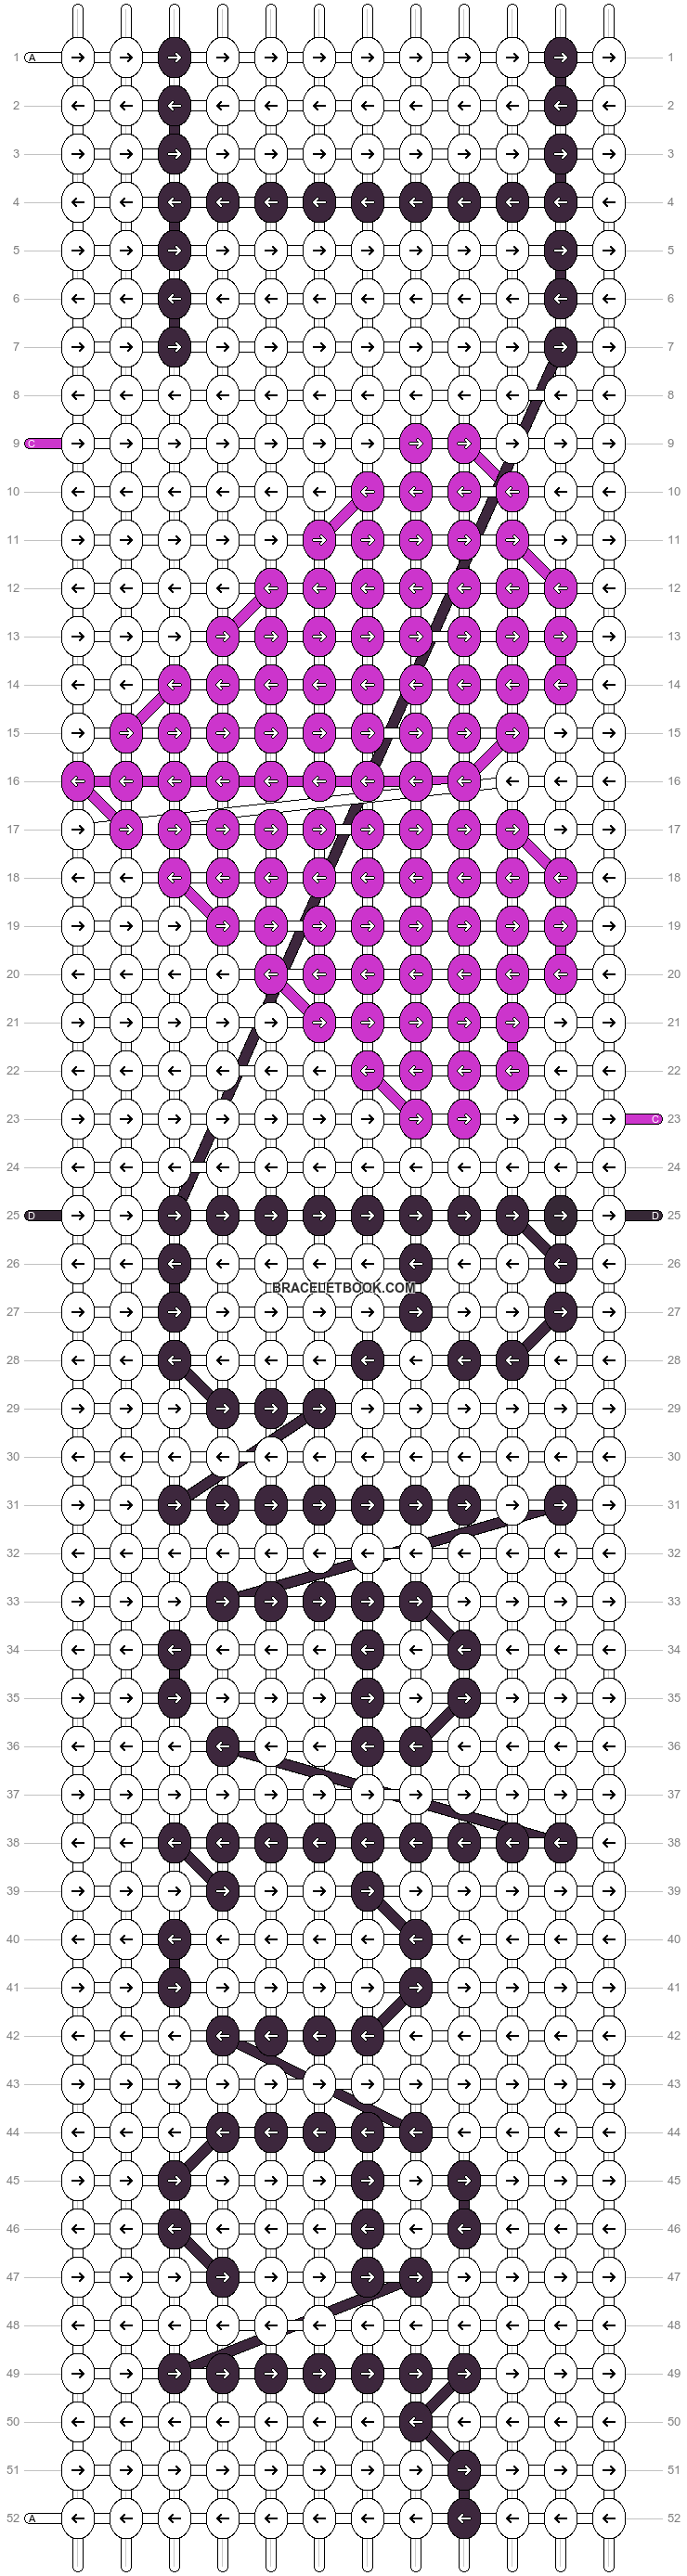 Alpha pattern #5357 pattern